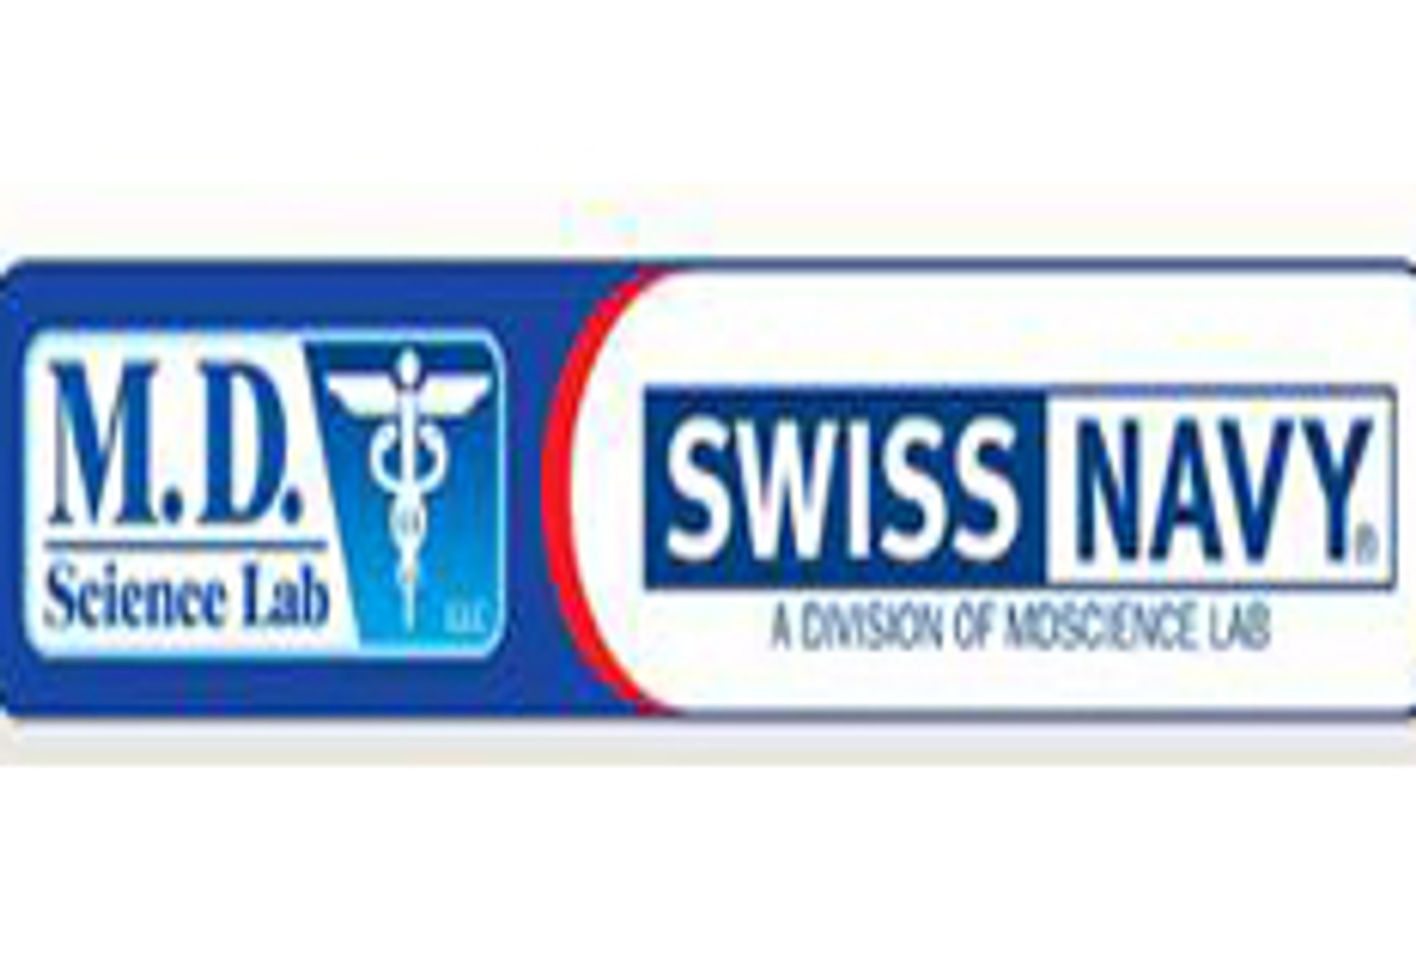 Swiss Navy to Sponsor 2012 Grabby Awards